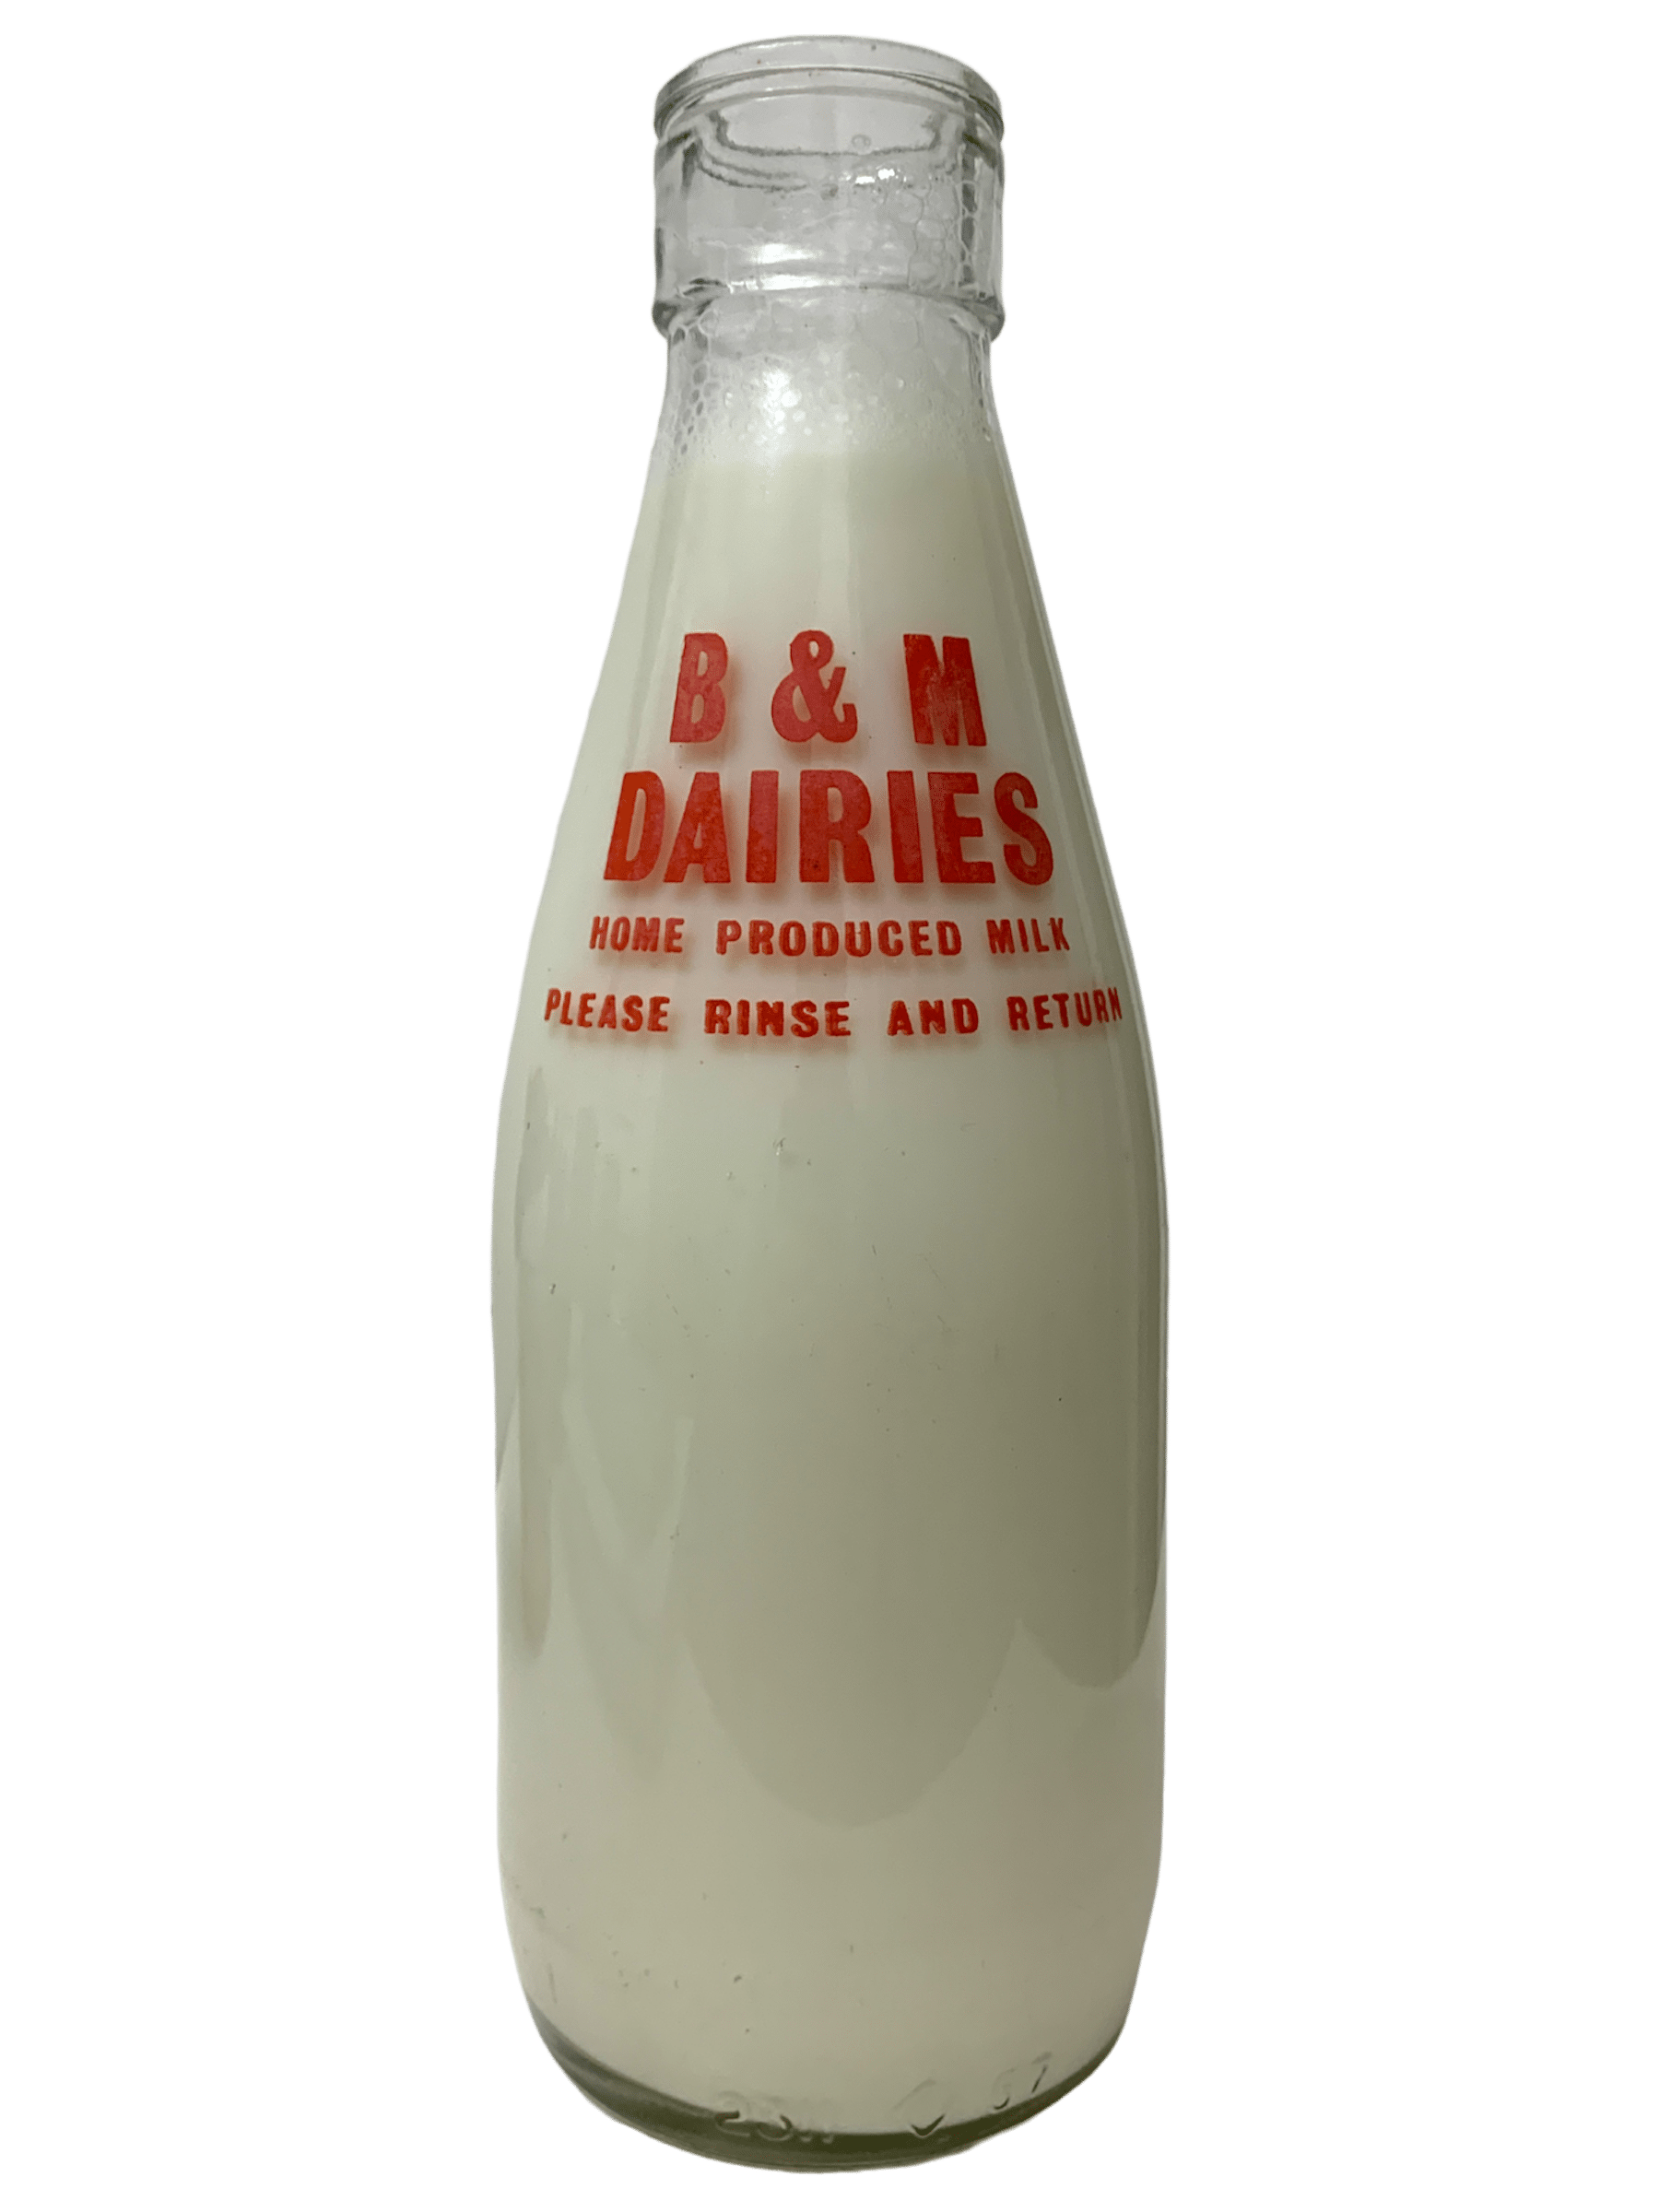 B & M Dairies - www.Kelis.info #KelisTheBottleBank